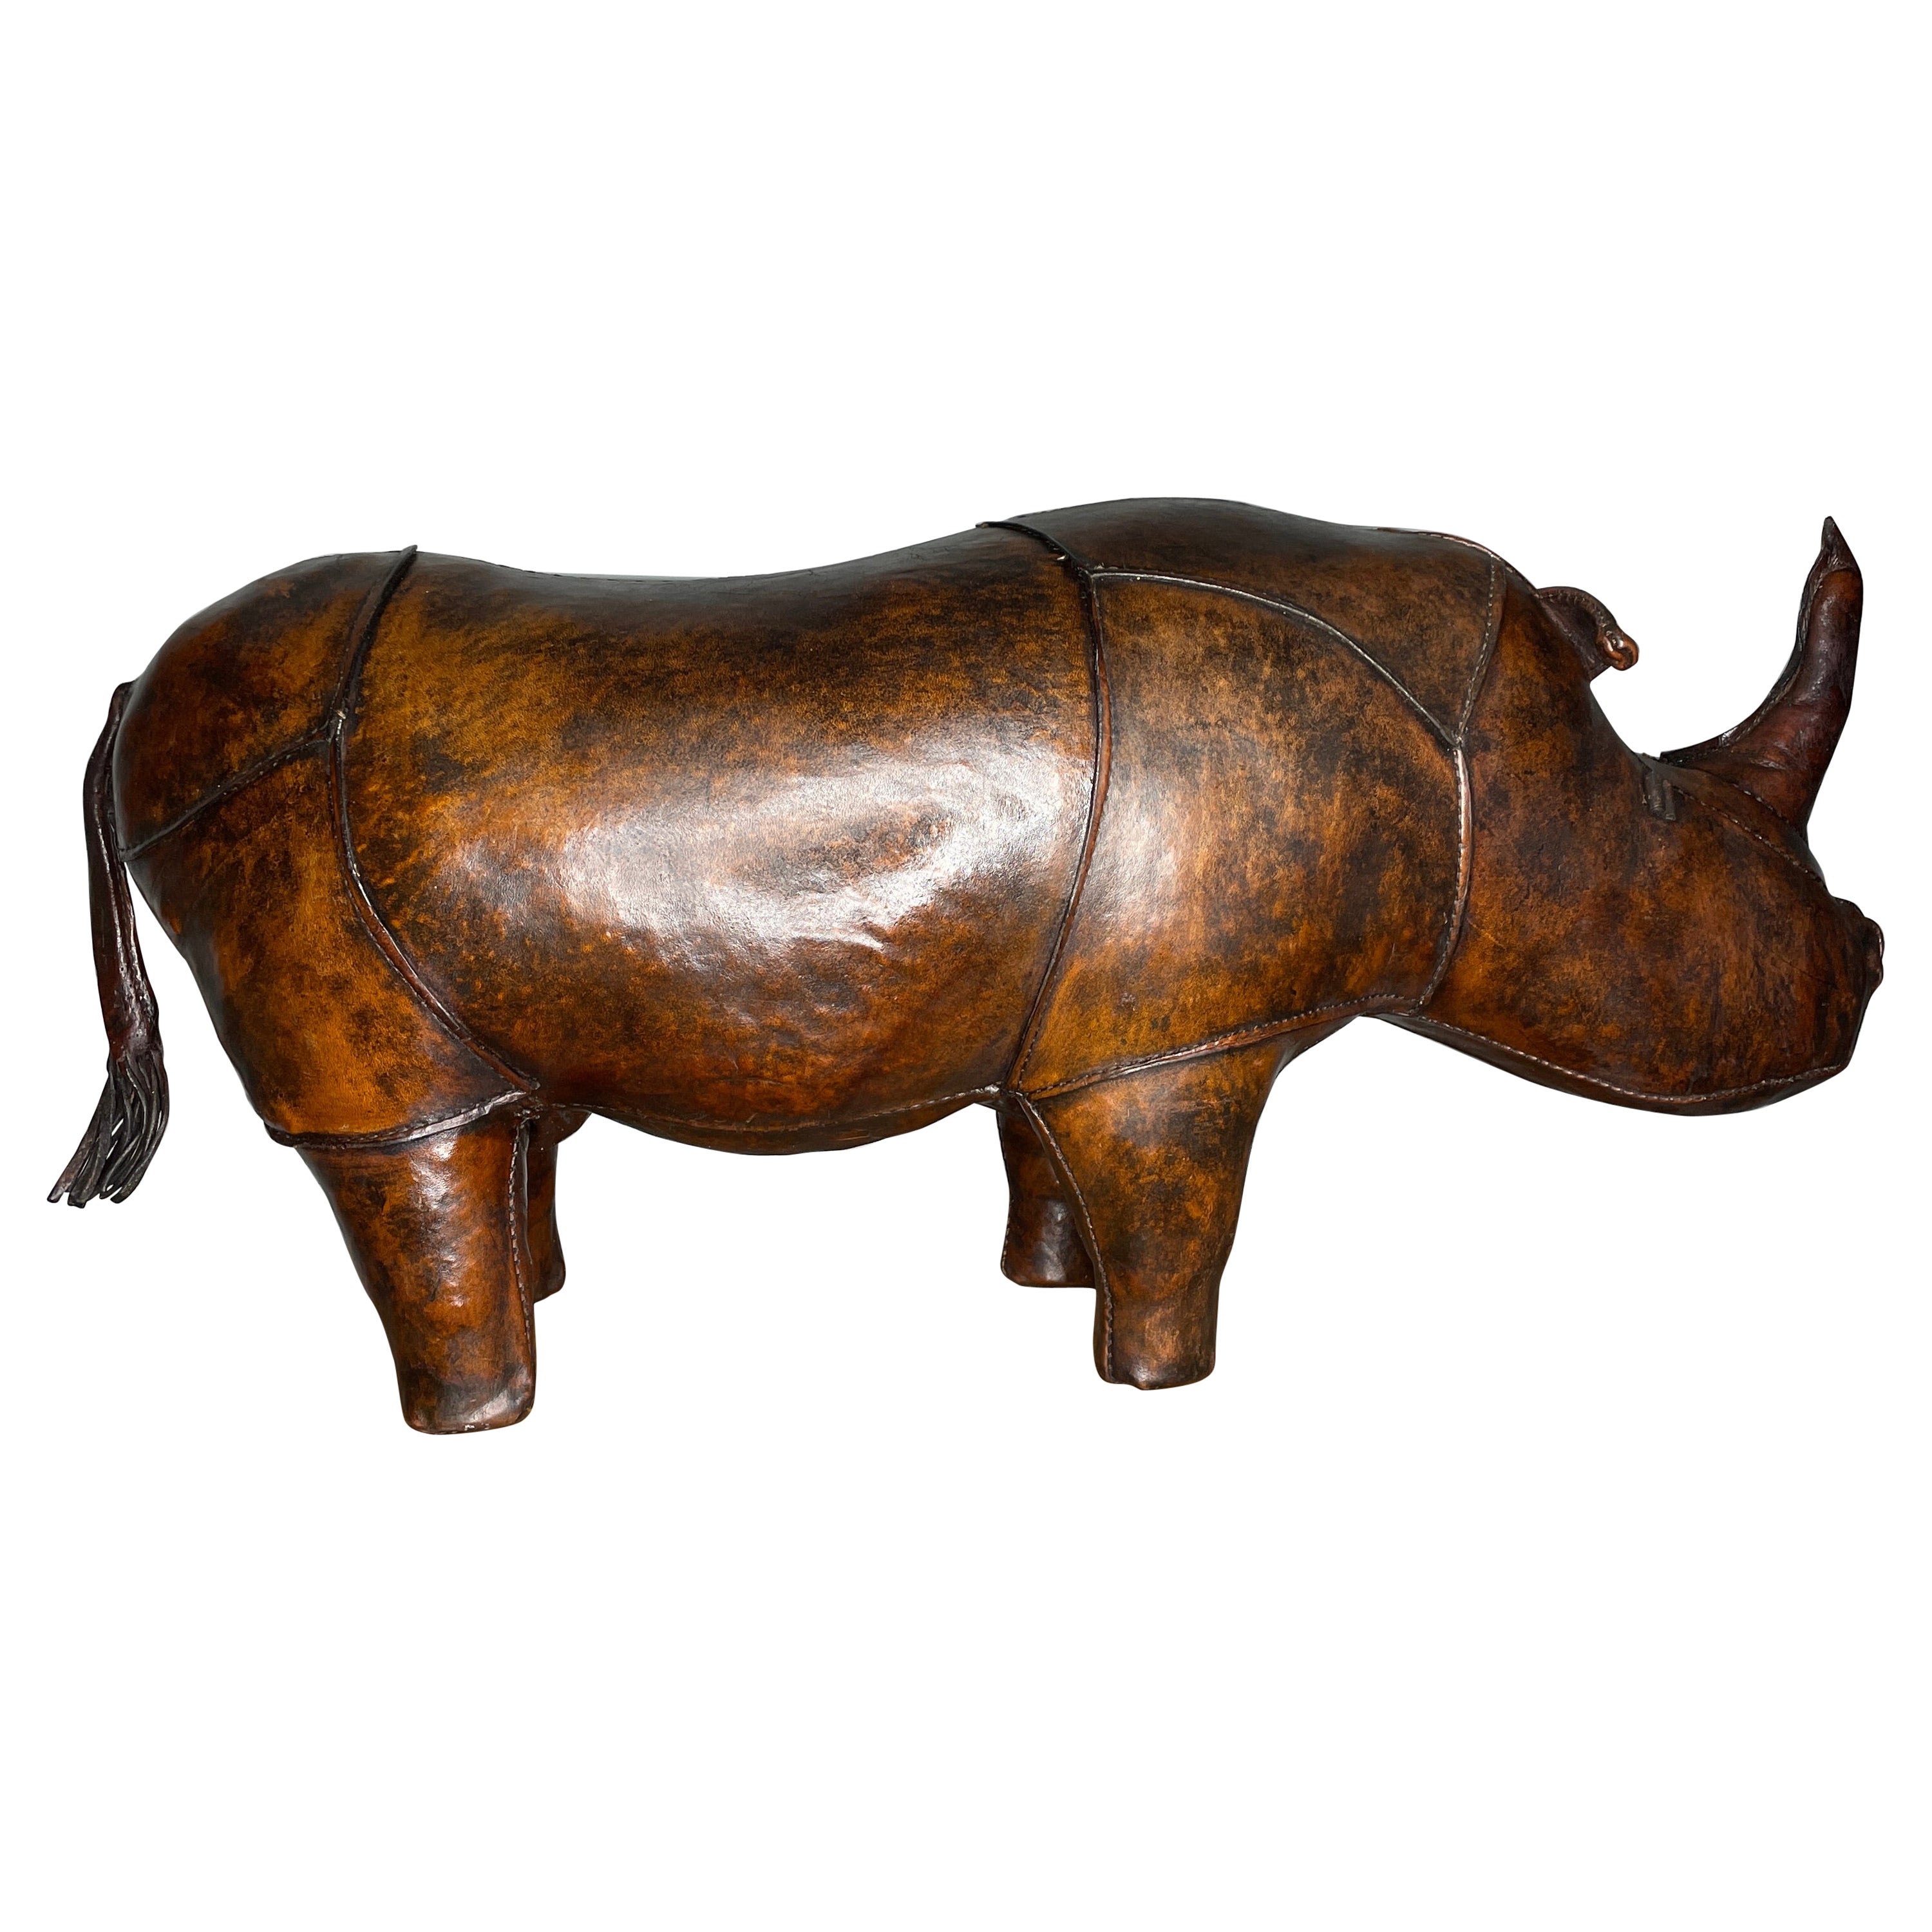 Pouf Rhino Animal Ottoman Dimitri Omersa pour Abercrombie and Fitch des années 1960